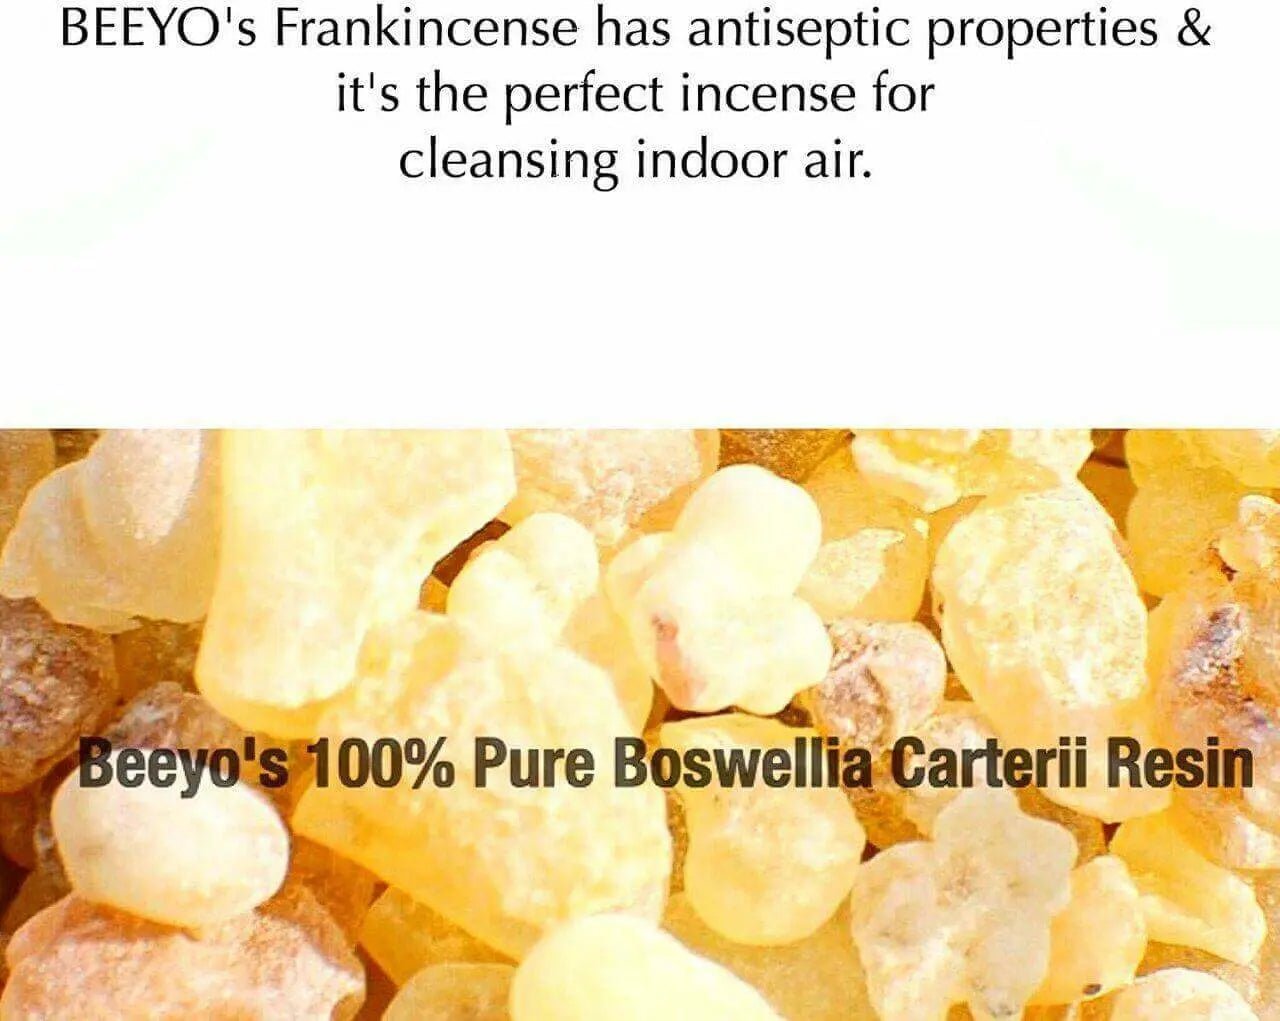 Now® Frankincense Oil Blend